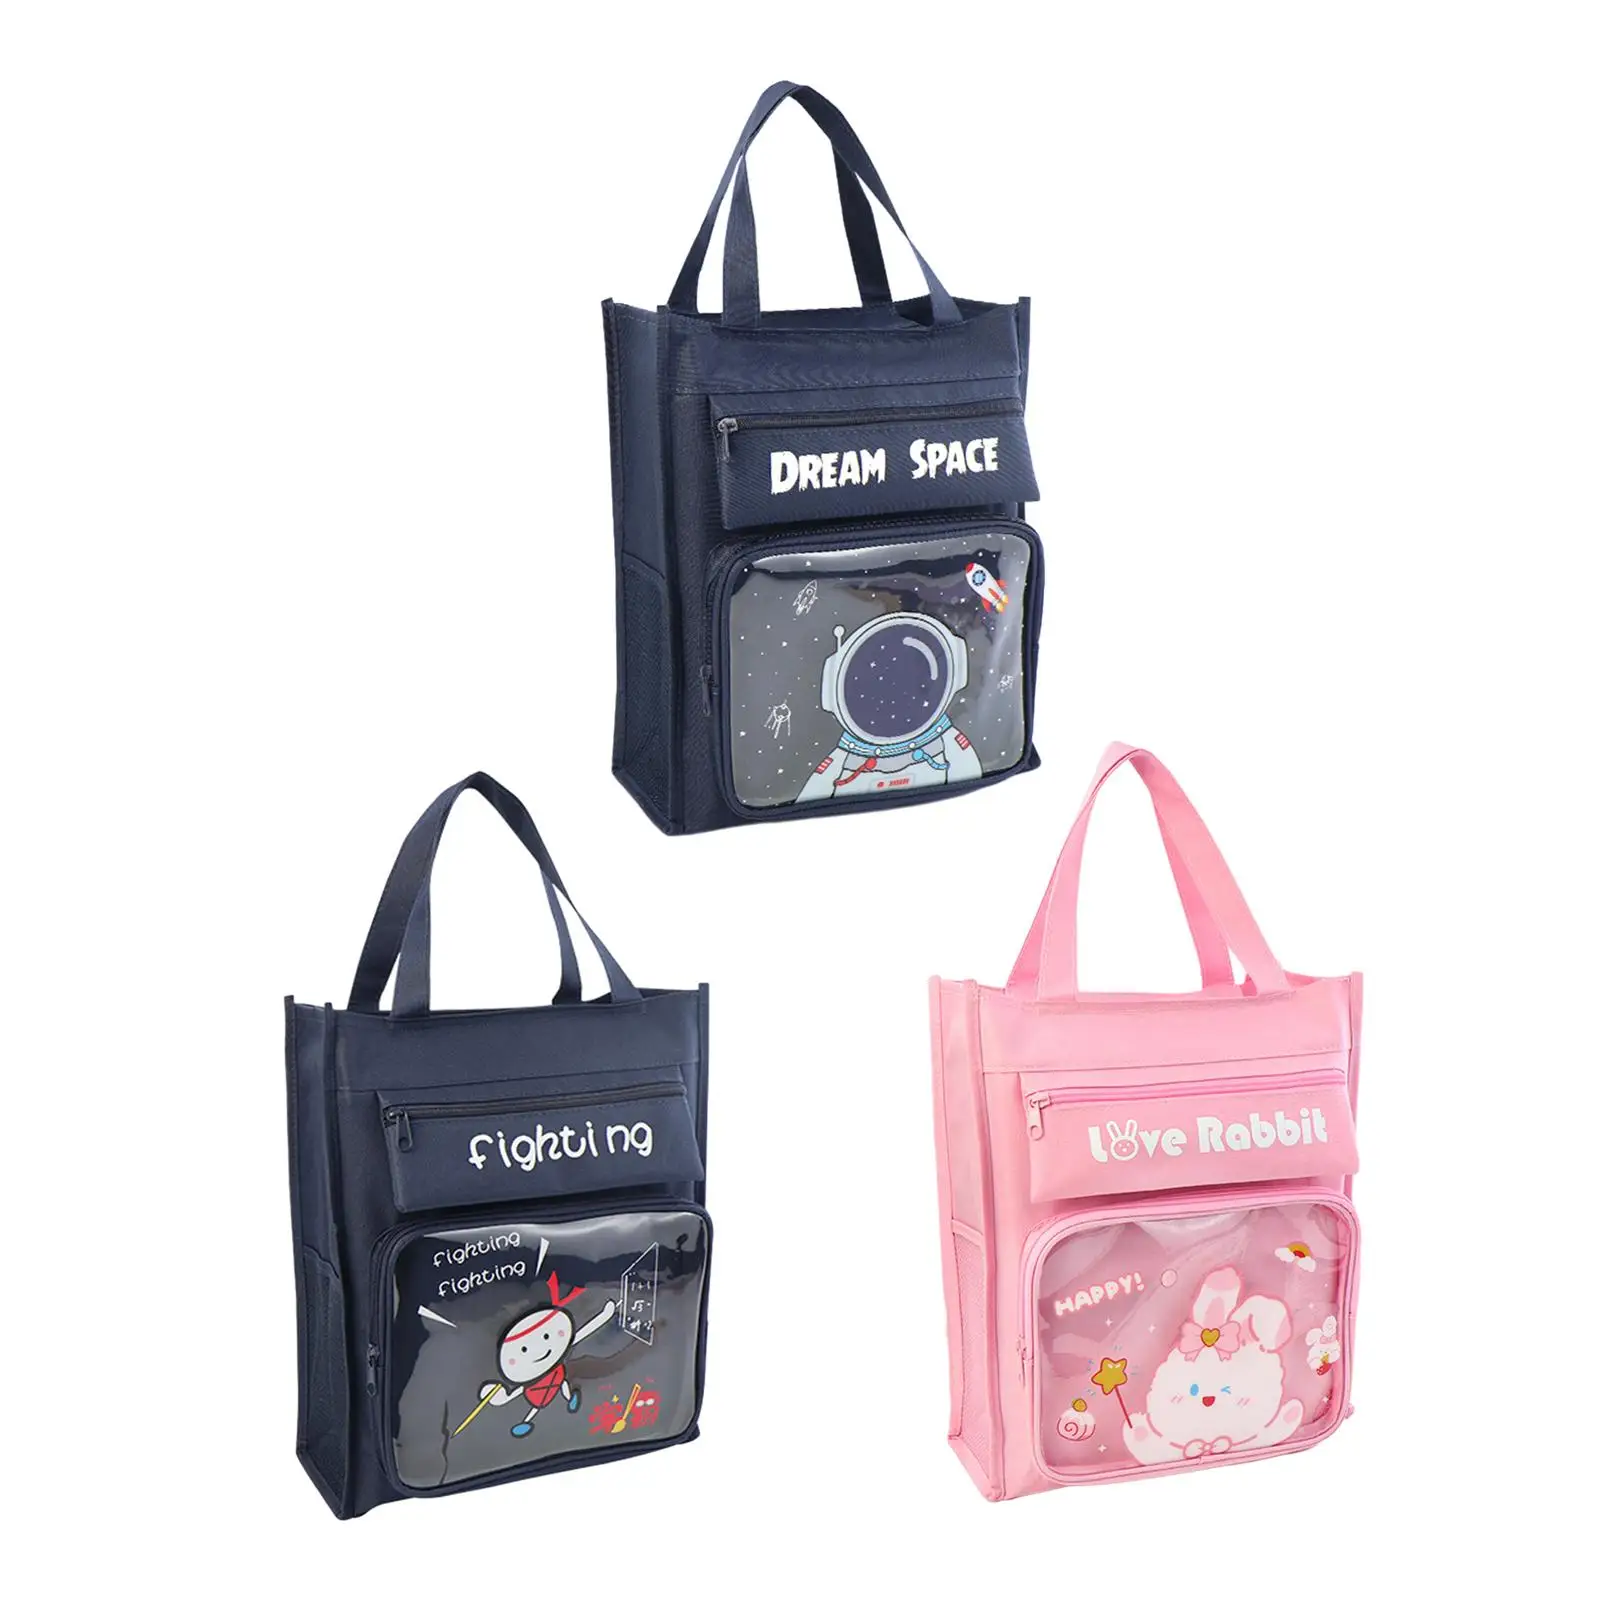 Kids Tote Bag Cute with Pocket Shopping Bag Large Capacity Handbag Oxford Cloth Book Bag for Book Casual Outdoor